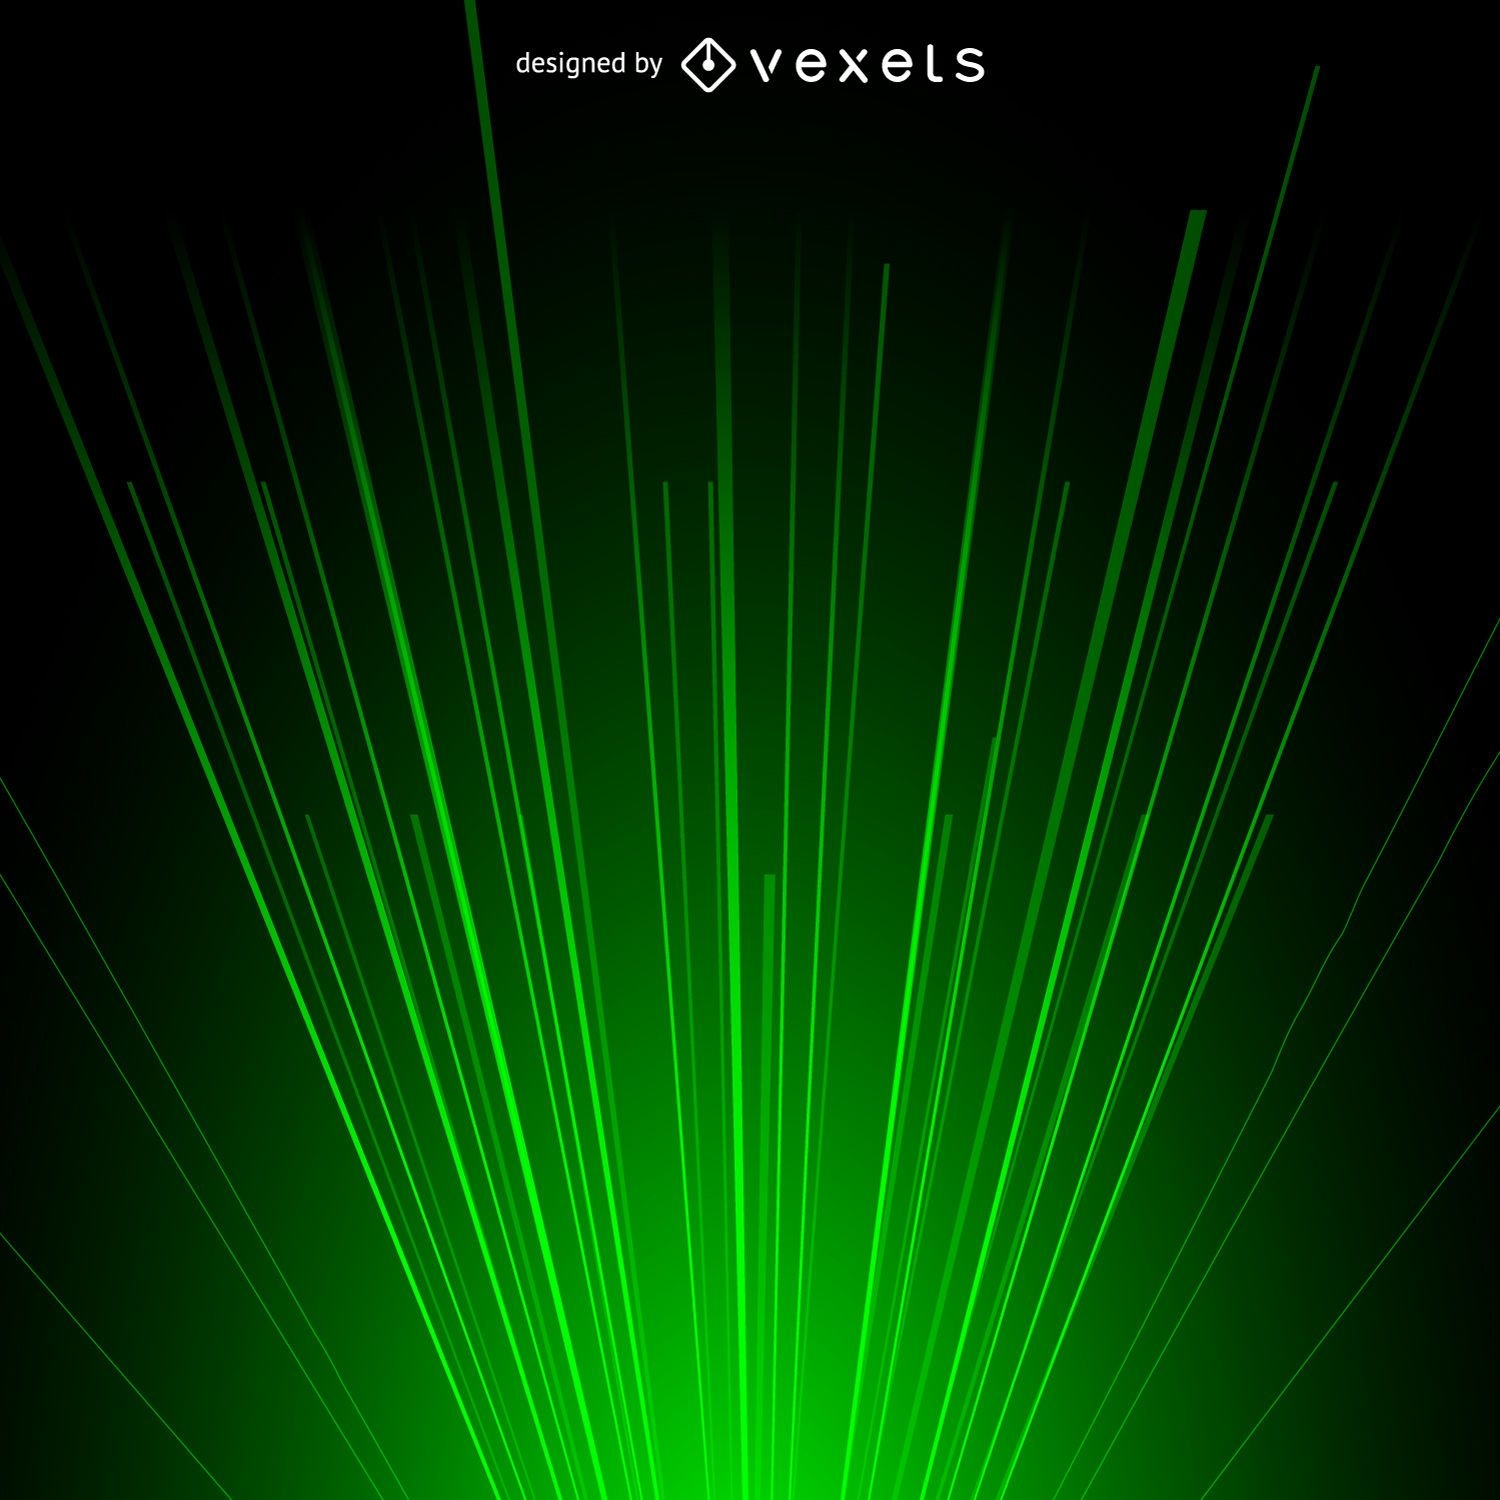 Green laser beam light background